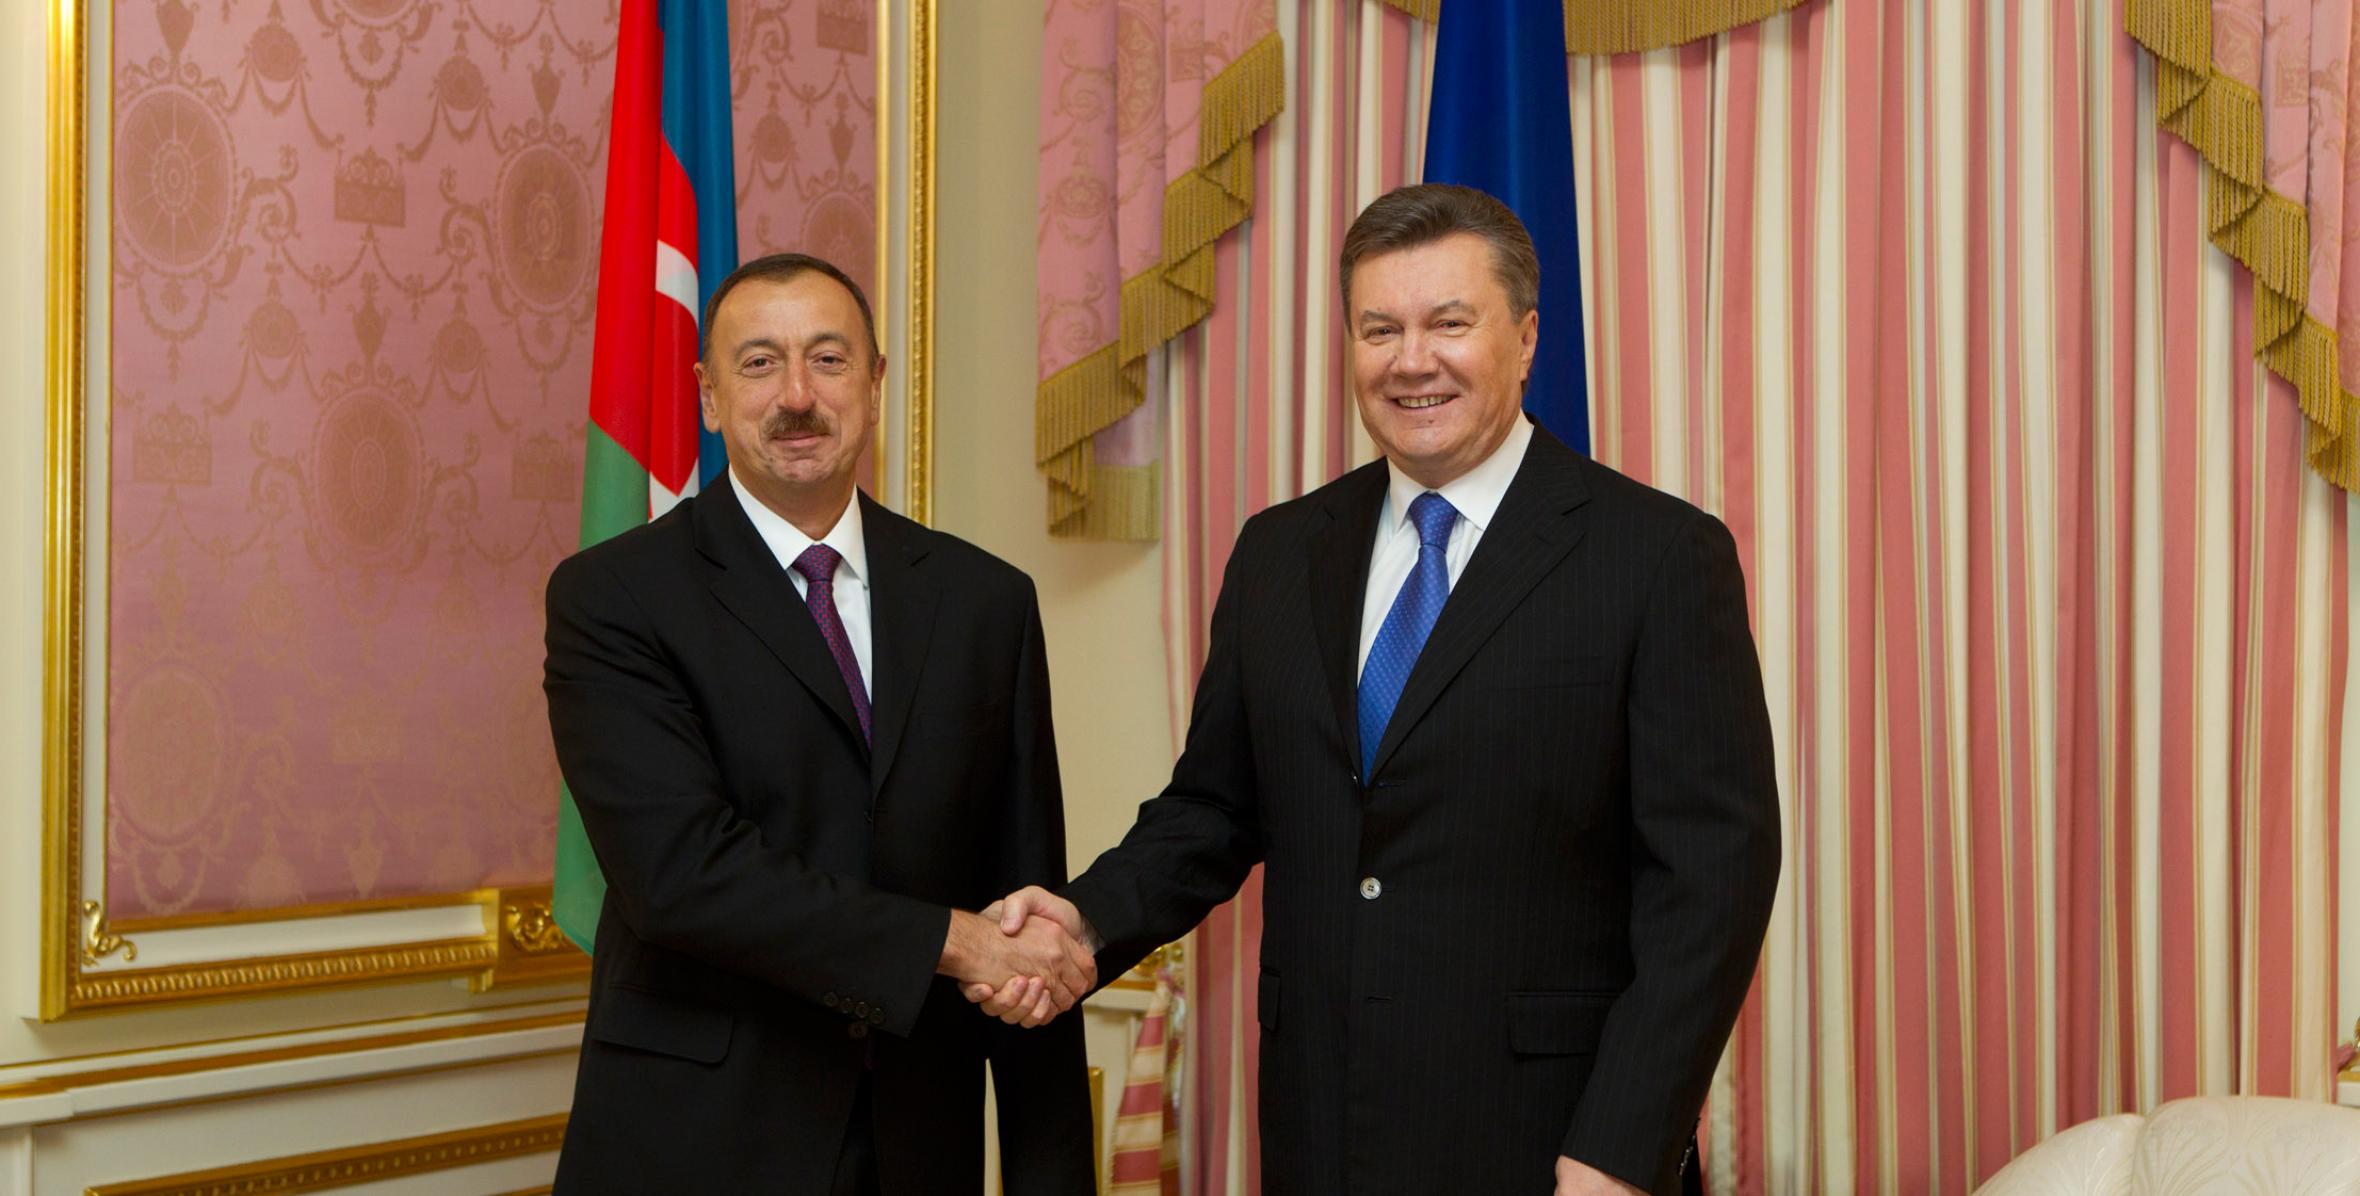 Ilham Aliyev and Ukrainian President Viktor Yanukovych had a one-on-one meeting